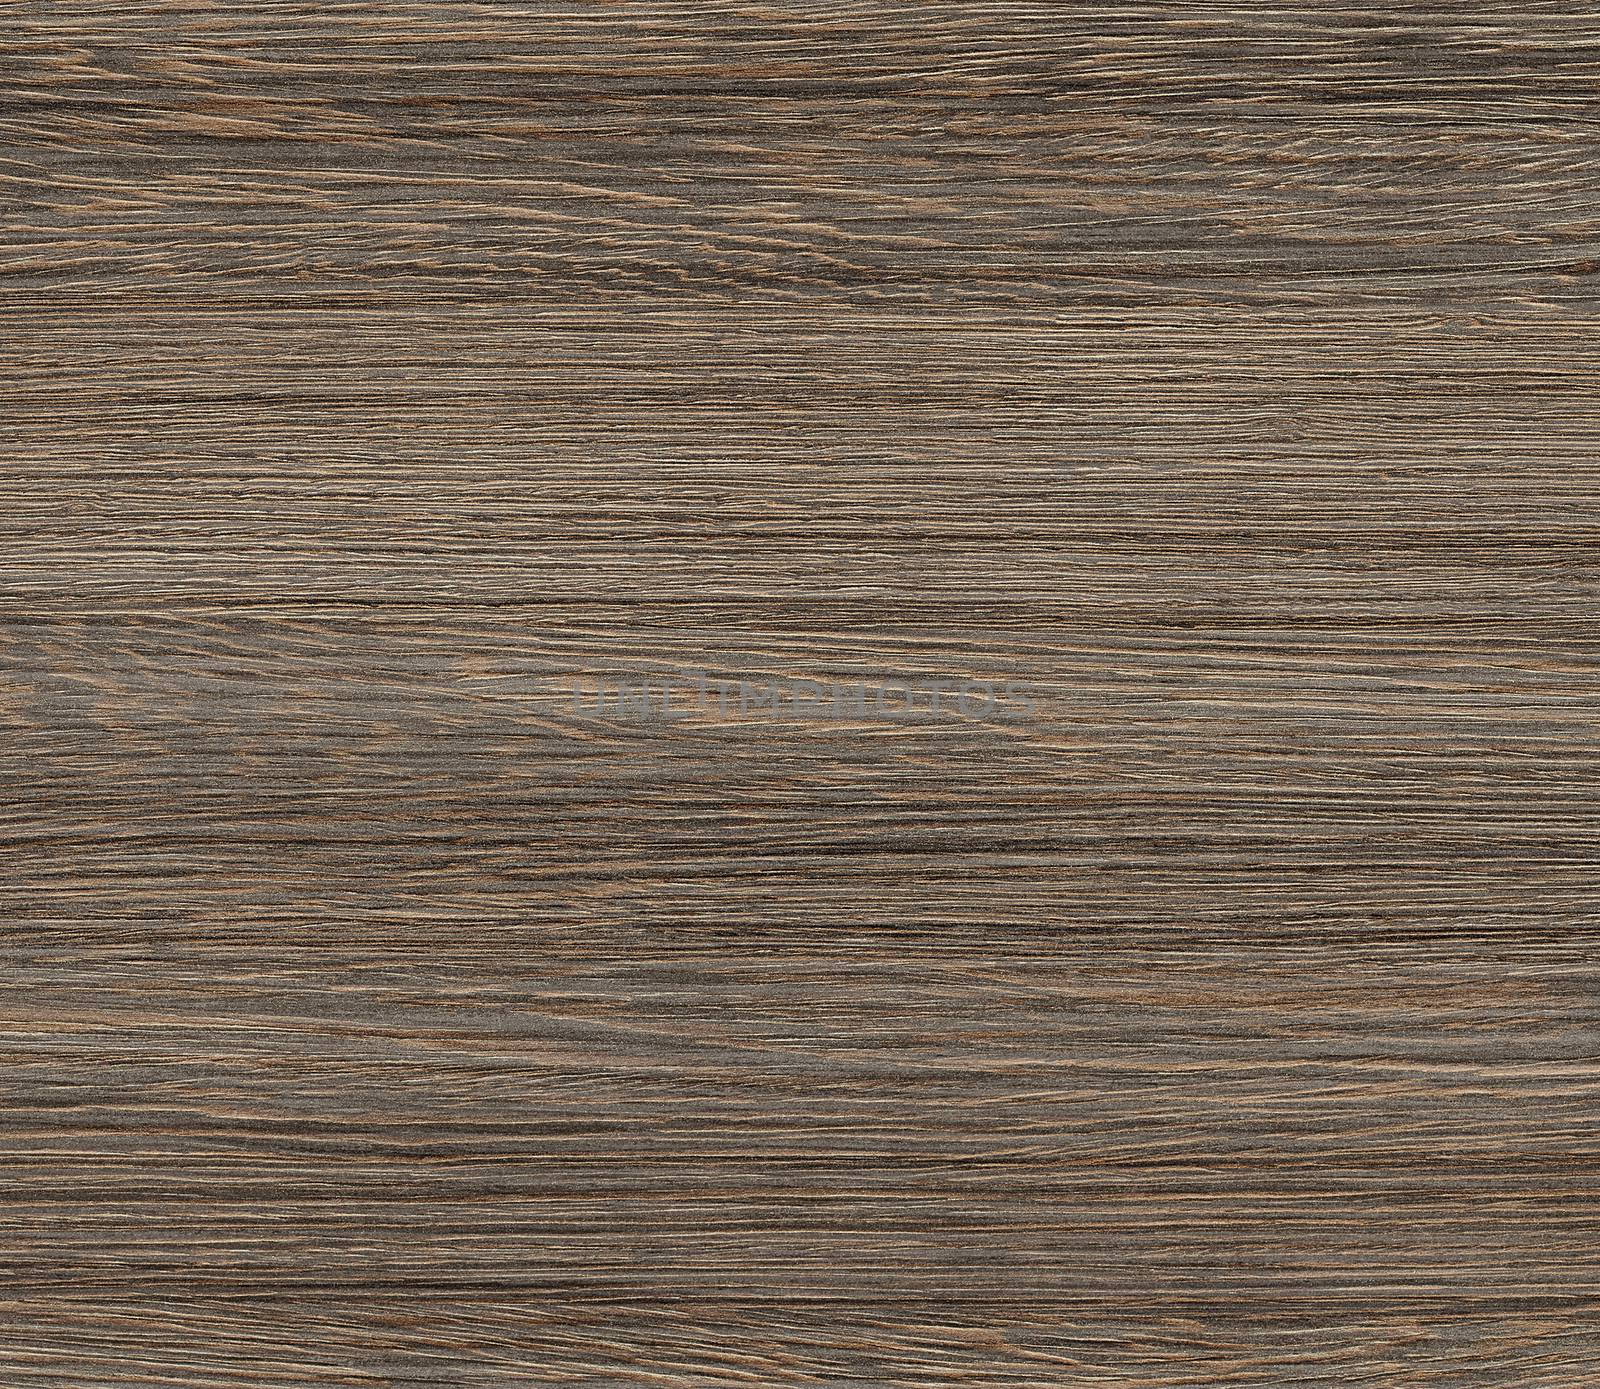 wood pattern texture, grunge wood pattern texture